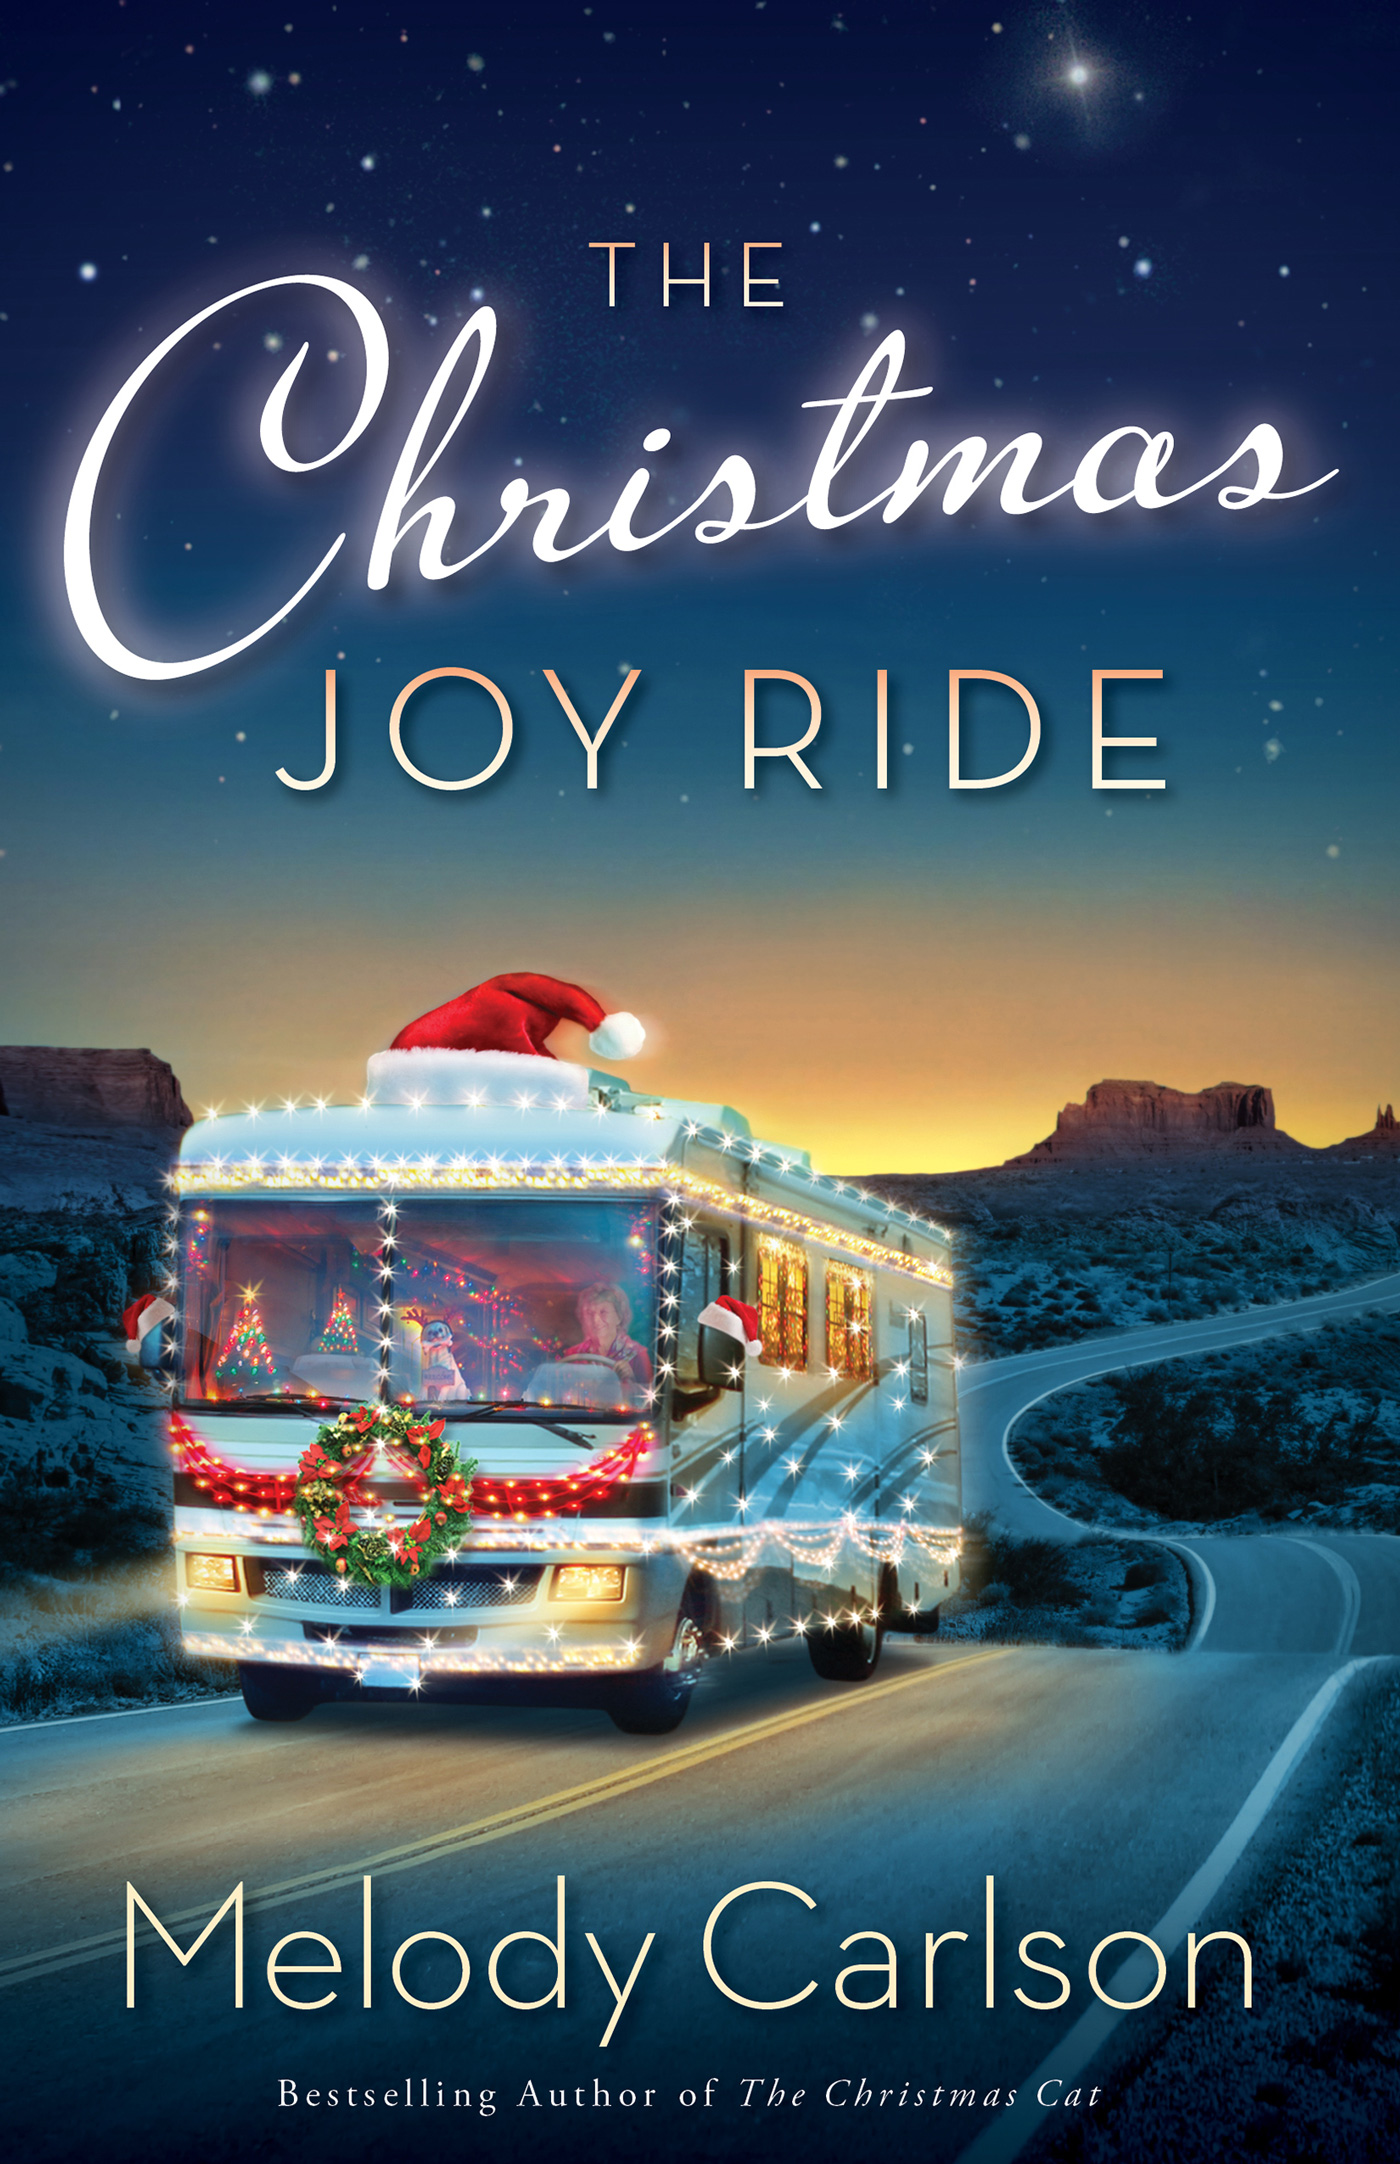 The Christmas Joy Ride (2015) by Melody Carlson